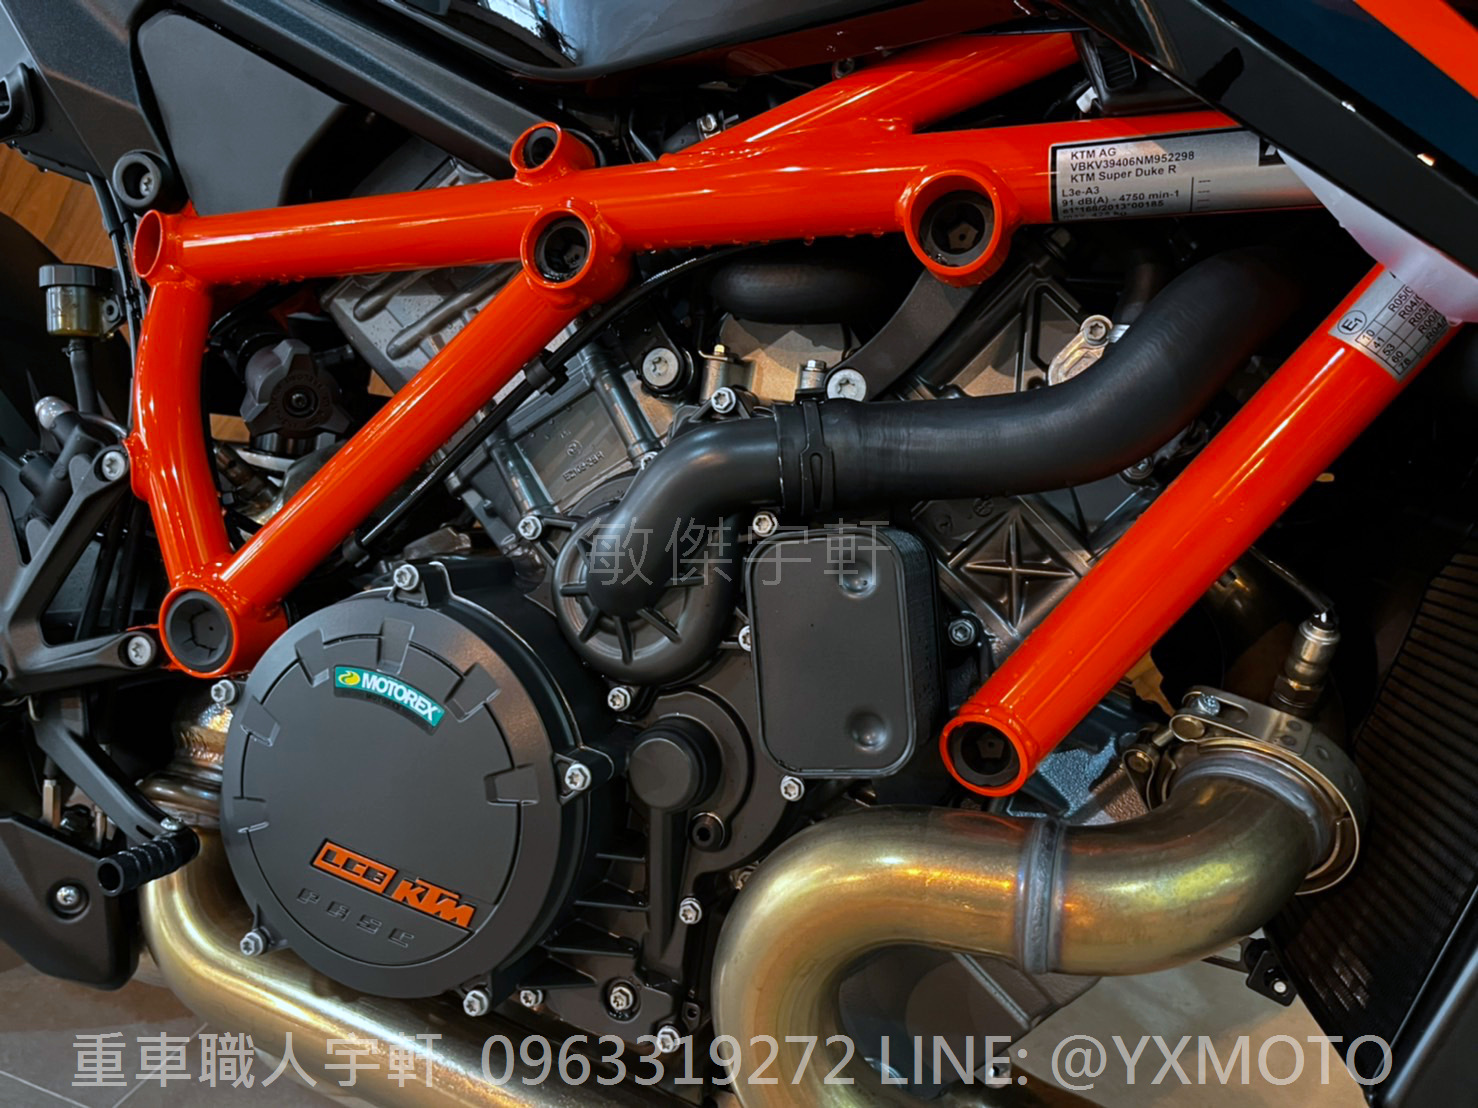 KTM 1290 SUPER DUKE R [Super Duke R]新車出售中 【敏傑宇軒】KTM 1290 SUPER DUKE R 藍黑色 總代理公司車 | 重車銷售職人-宇軒 (敏傑)